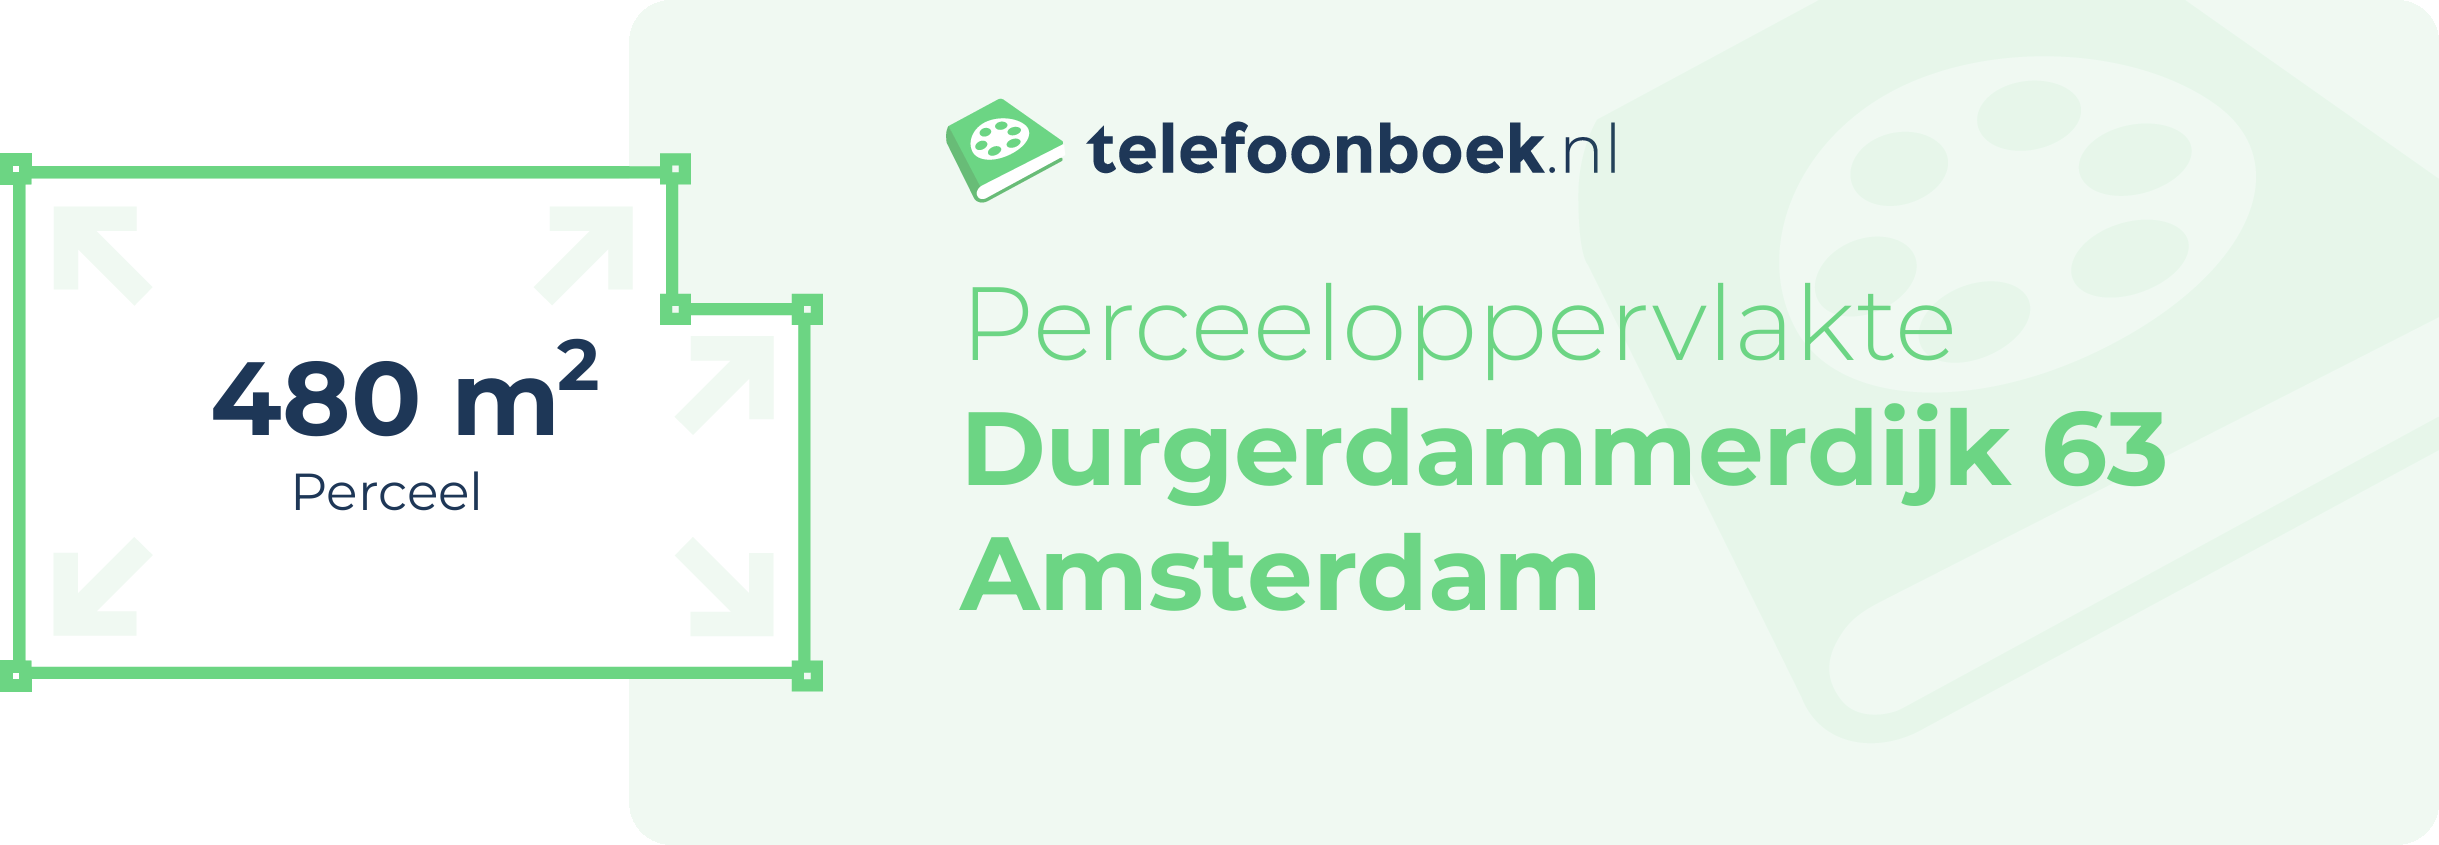 Perceeloppervlakte Durgerdammerdijk 63 Amsterdam